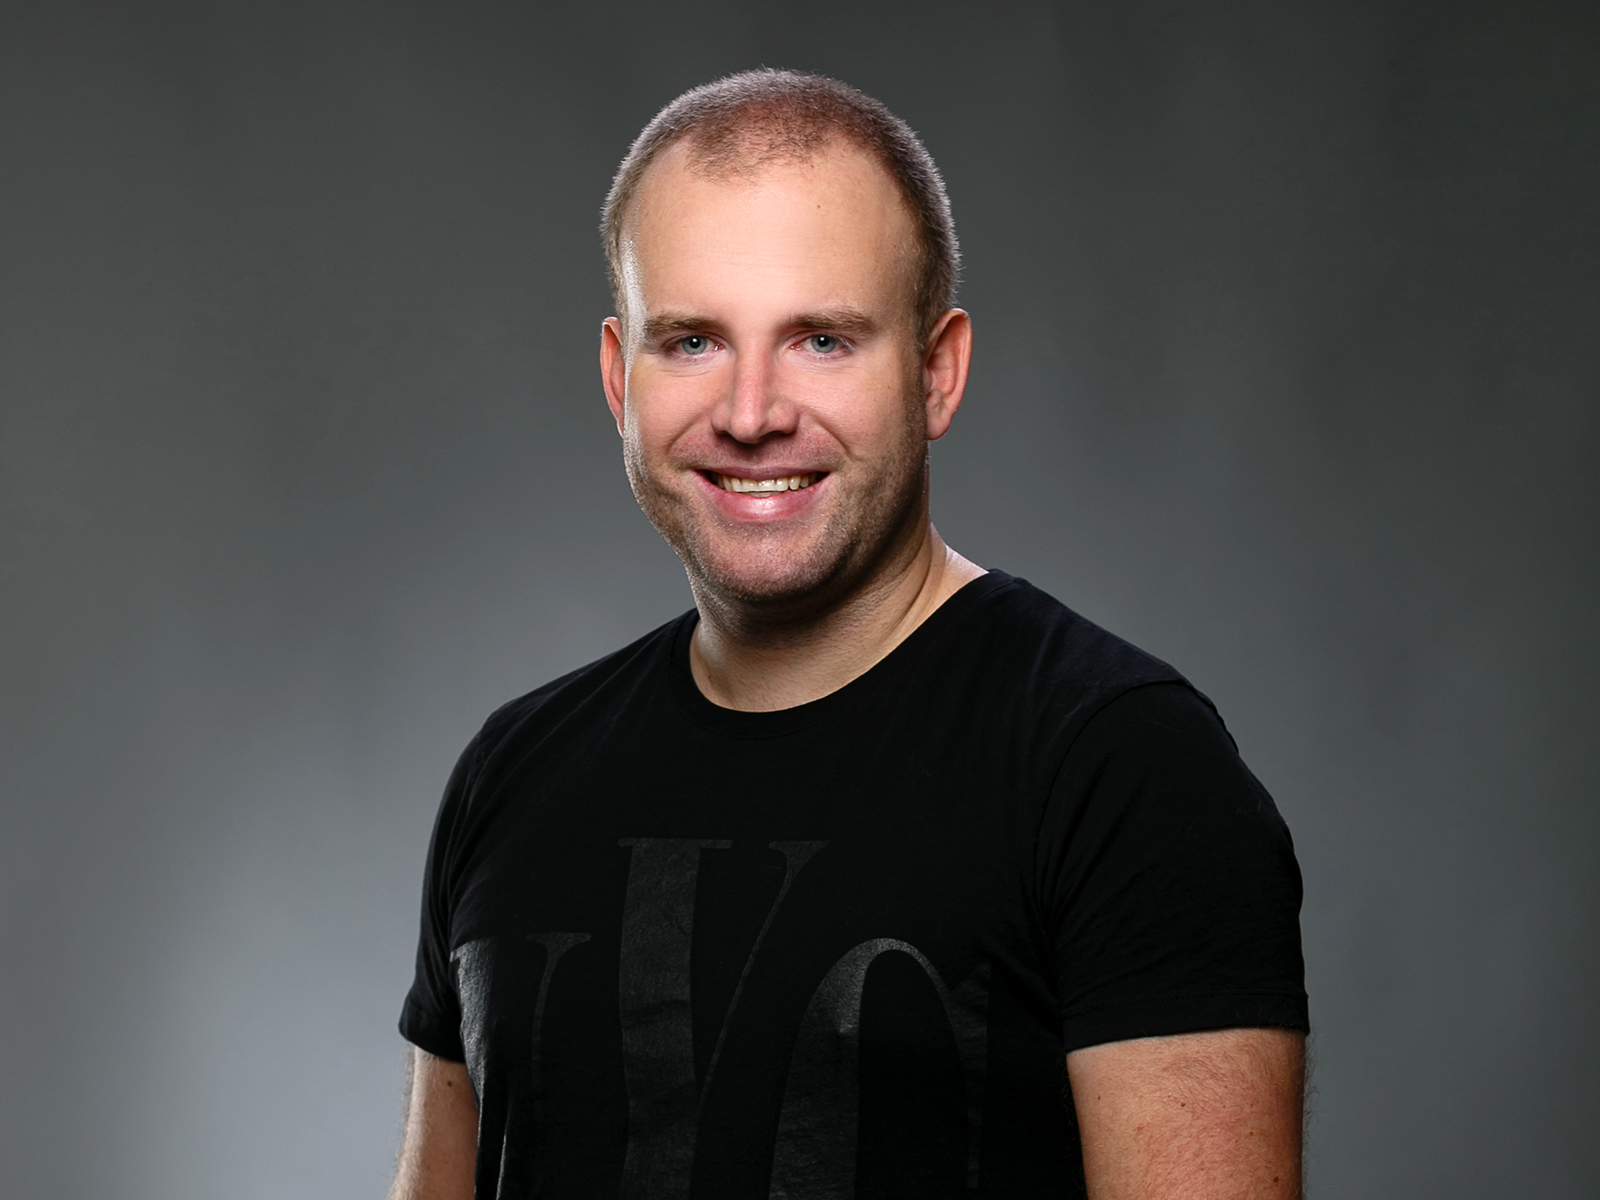 Martin Skála, the webmaster of QueenConcerts